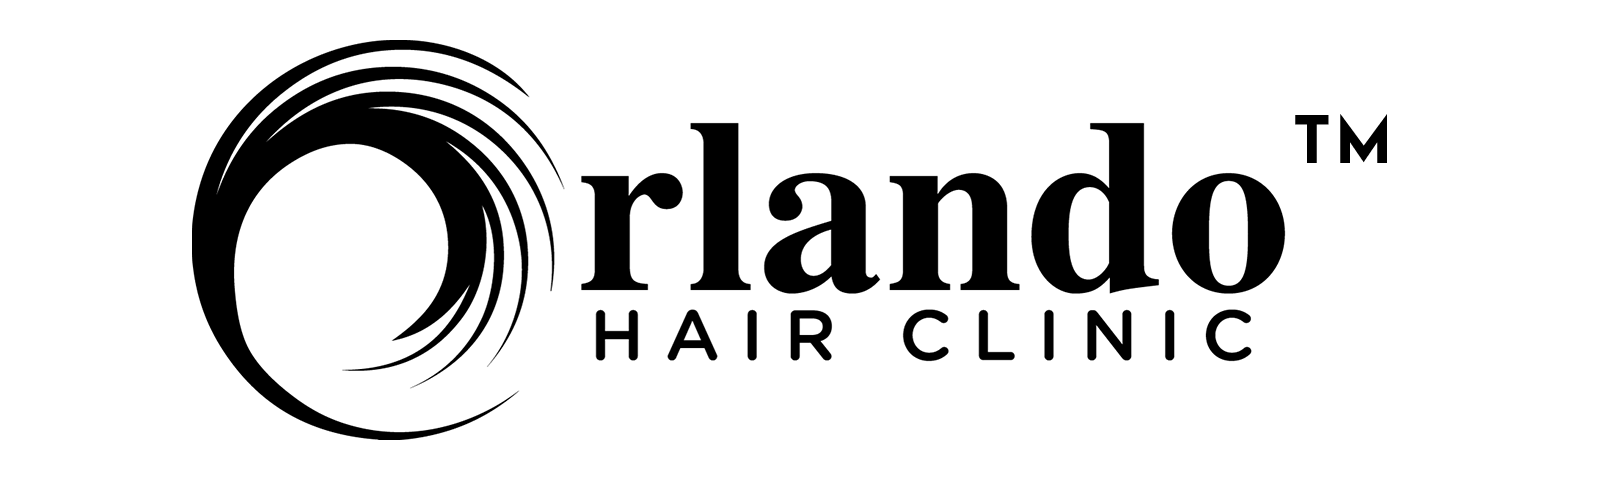 Logo-Black-9.png